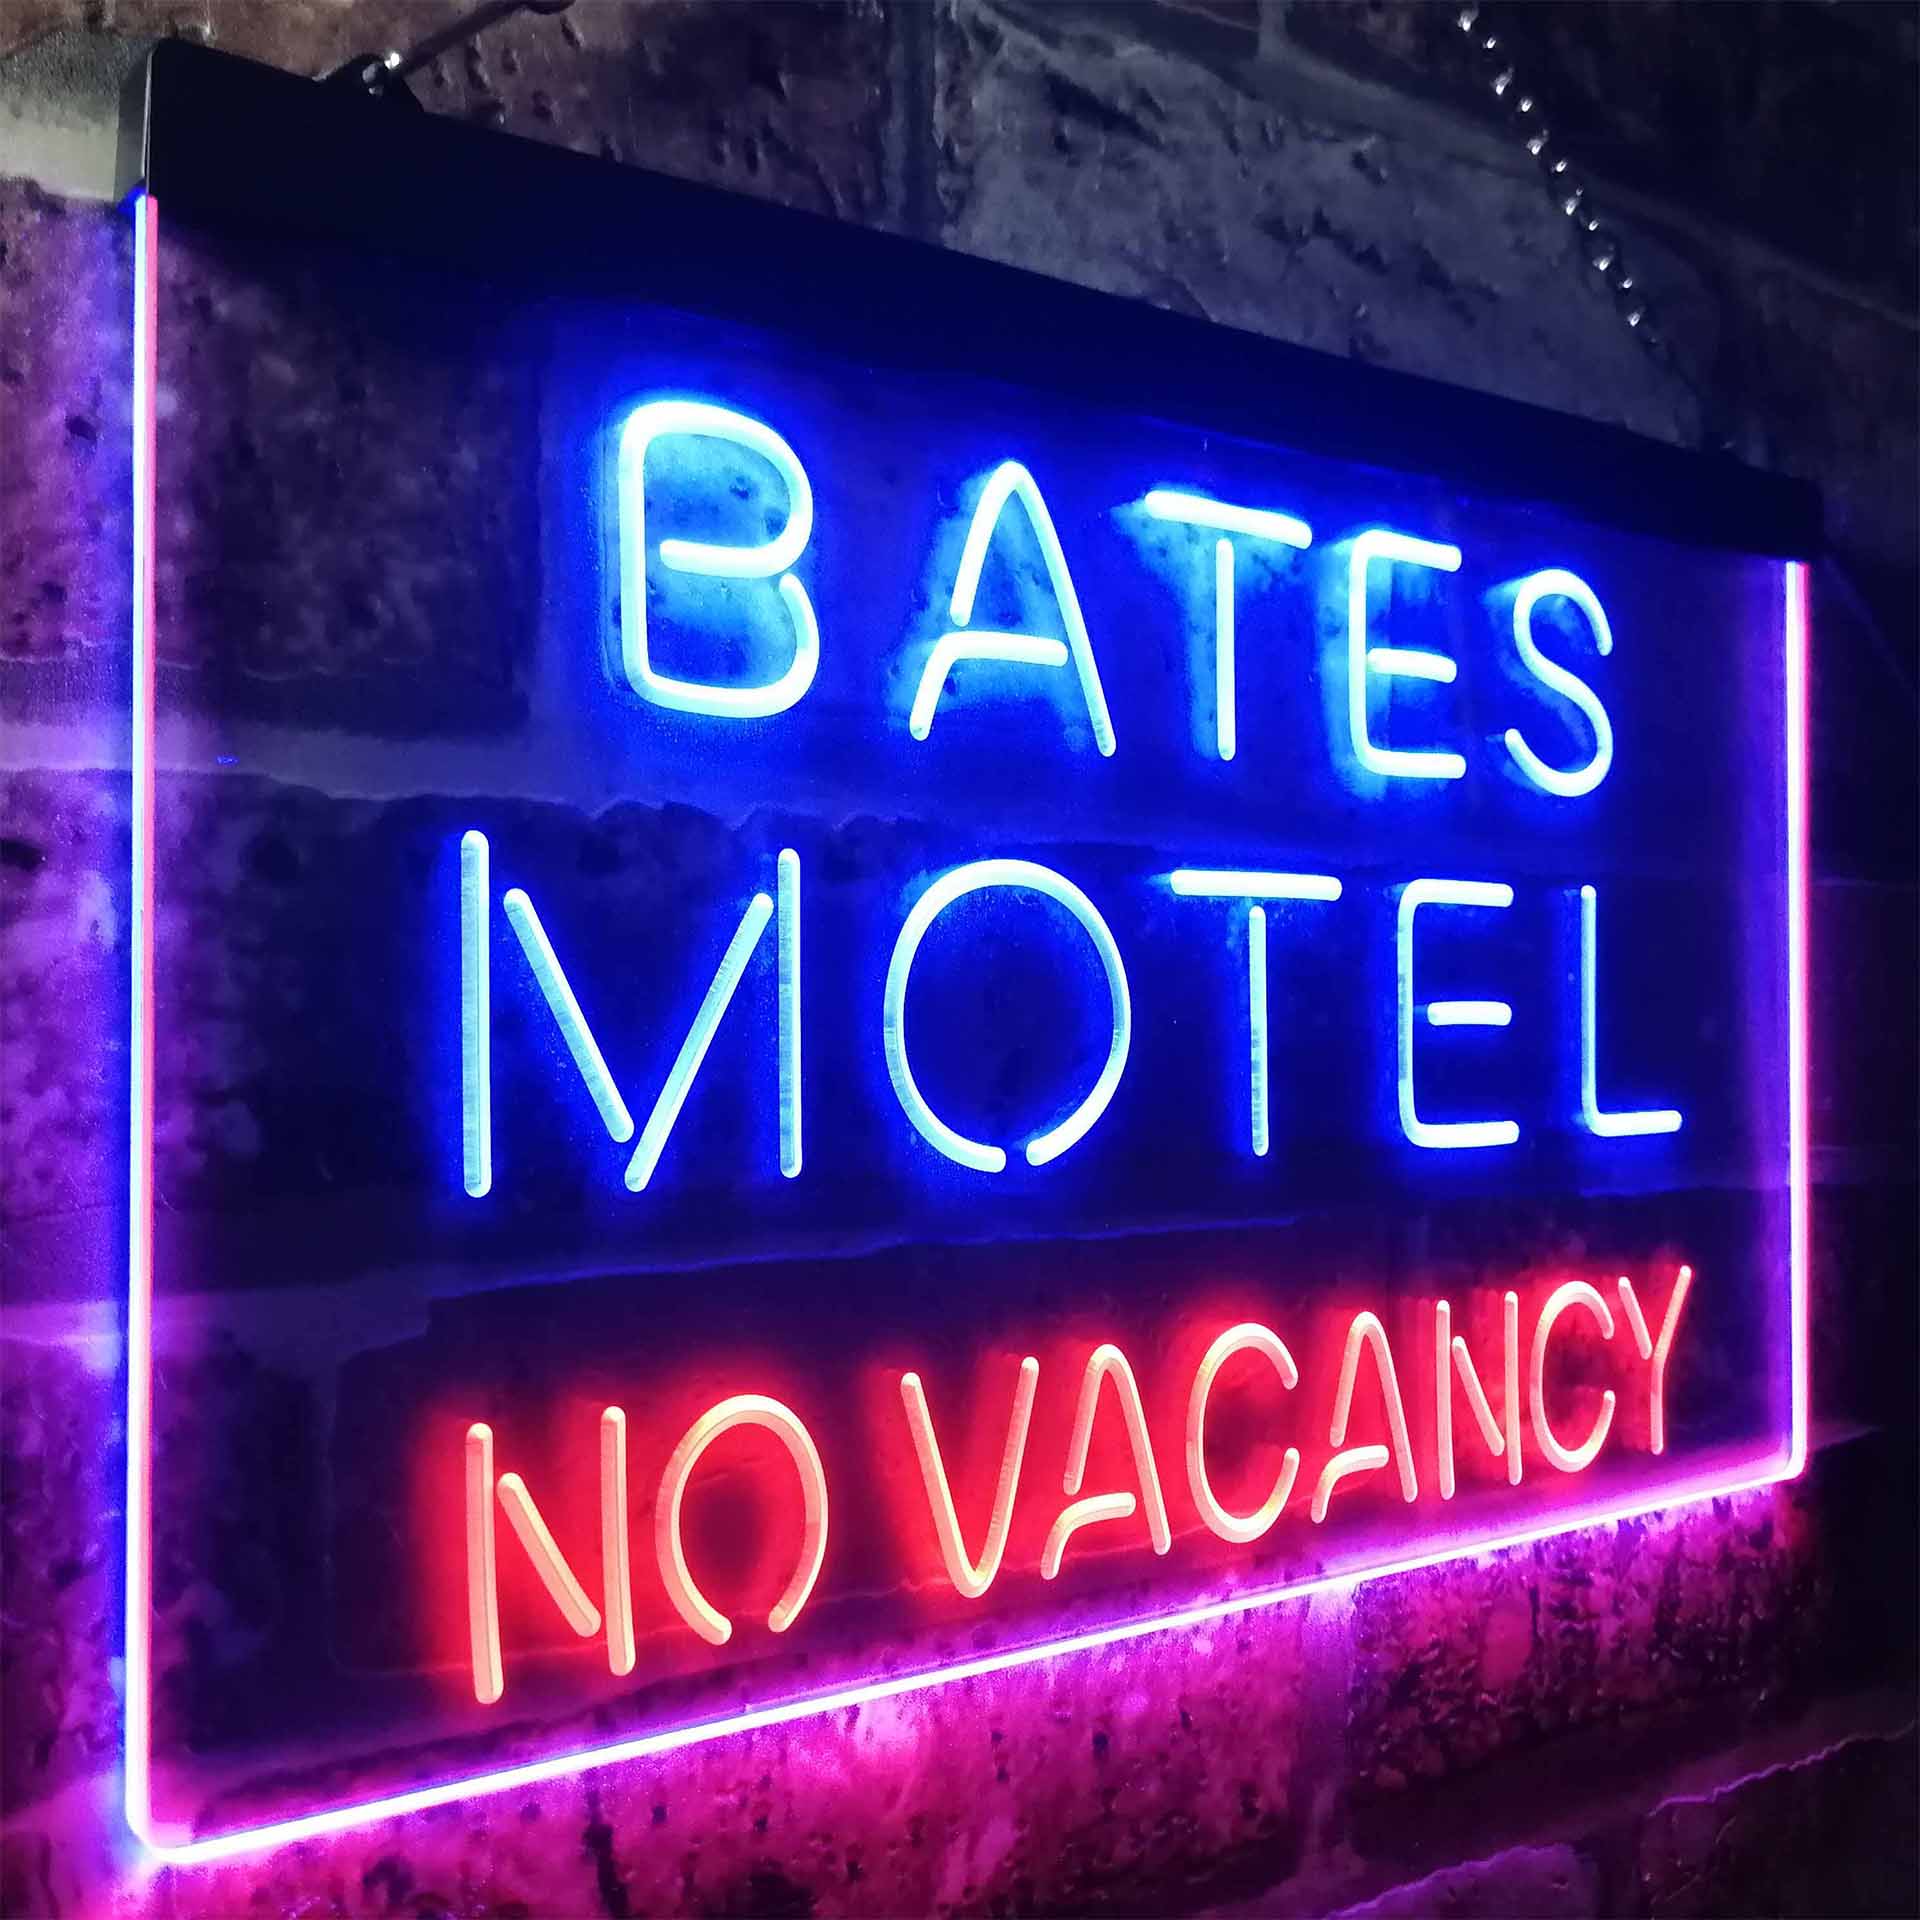 Bates Motel No Vacancy LED Neon Sign